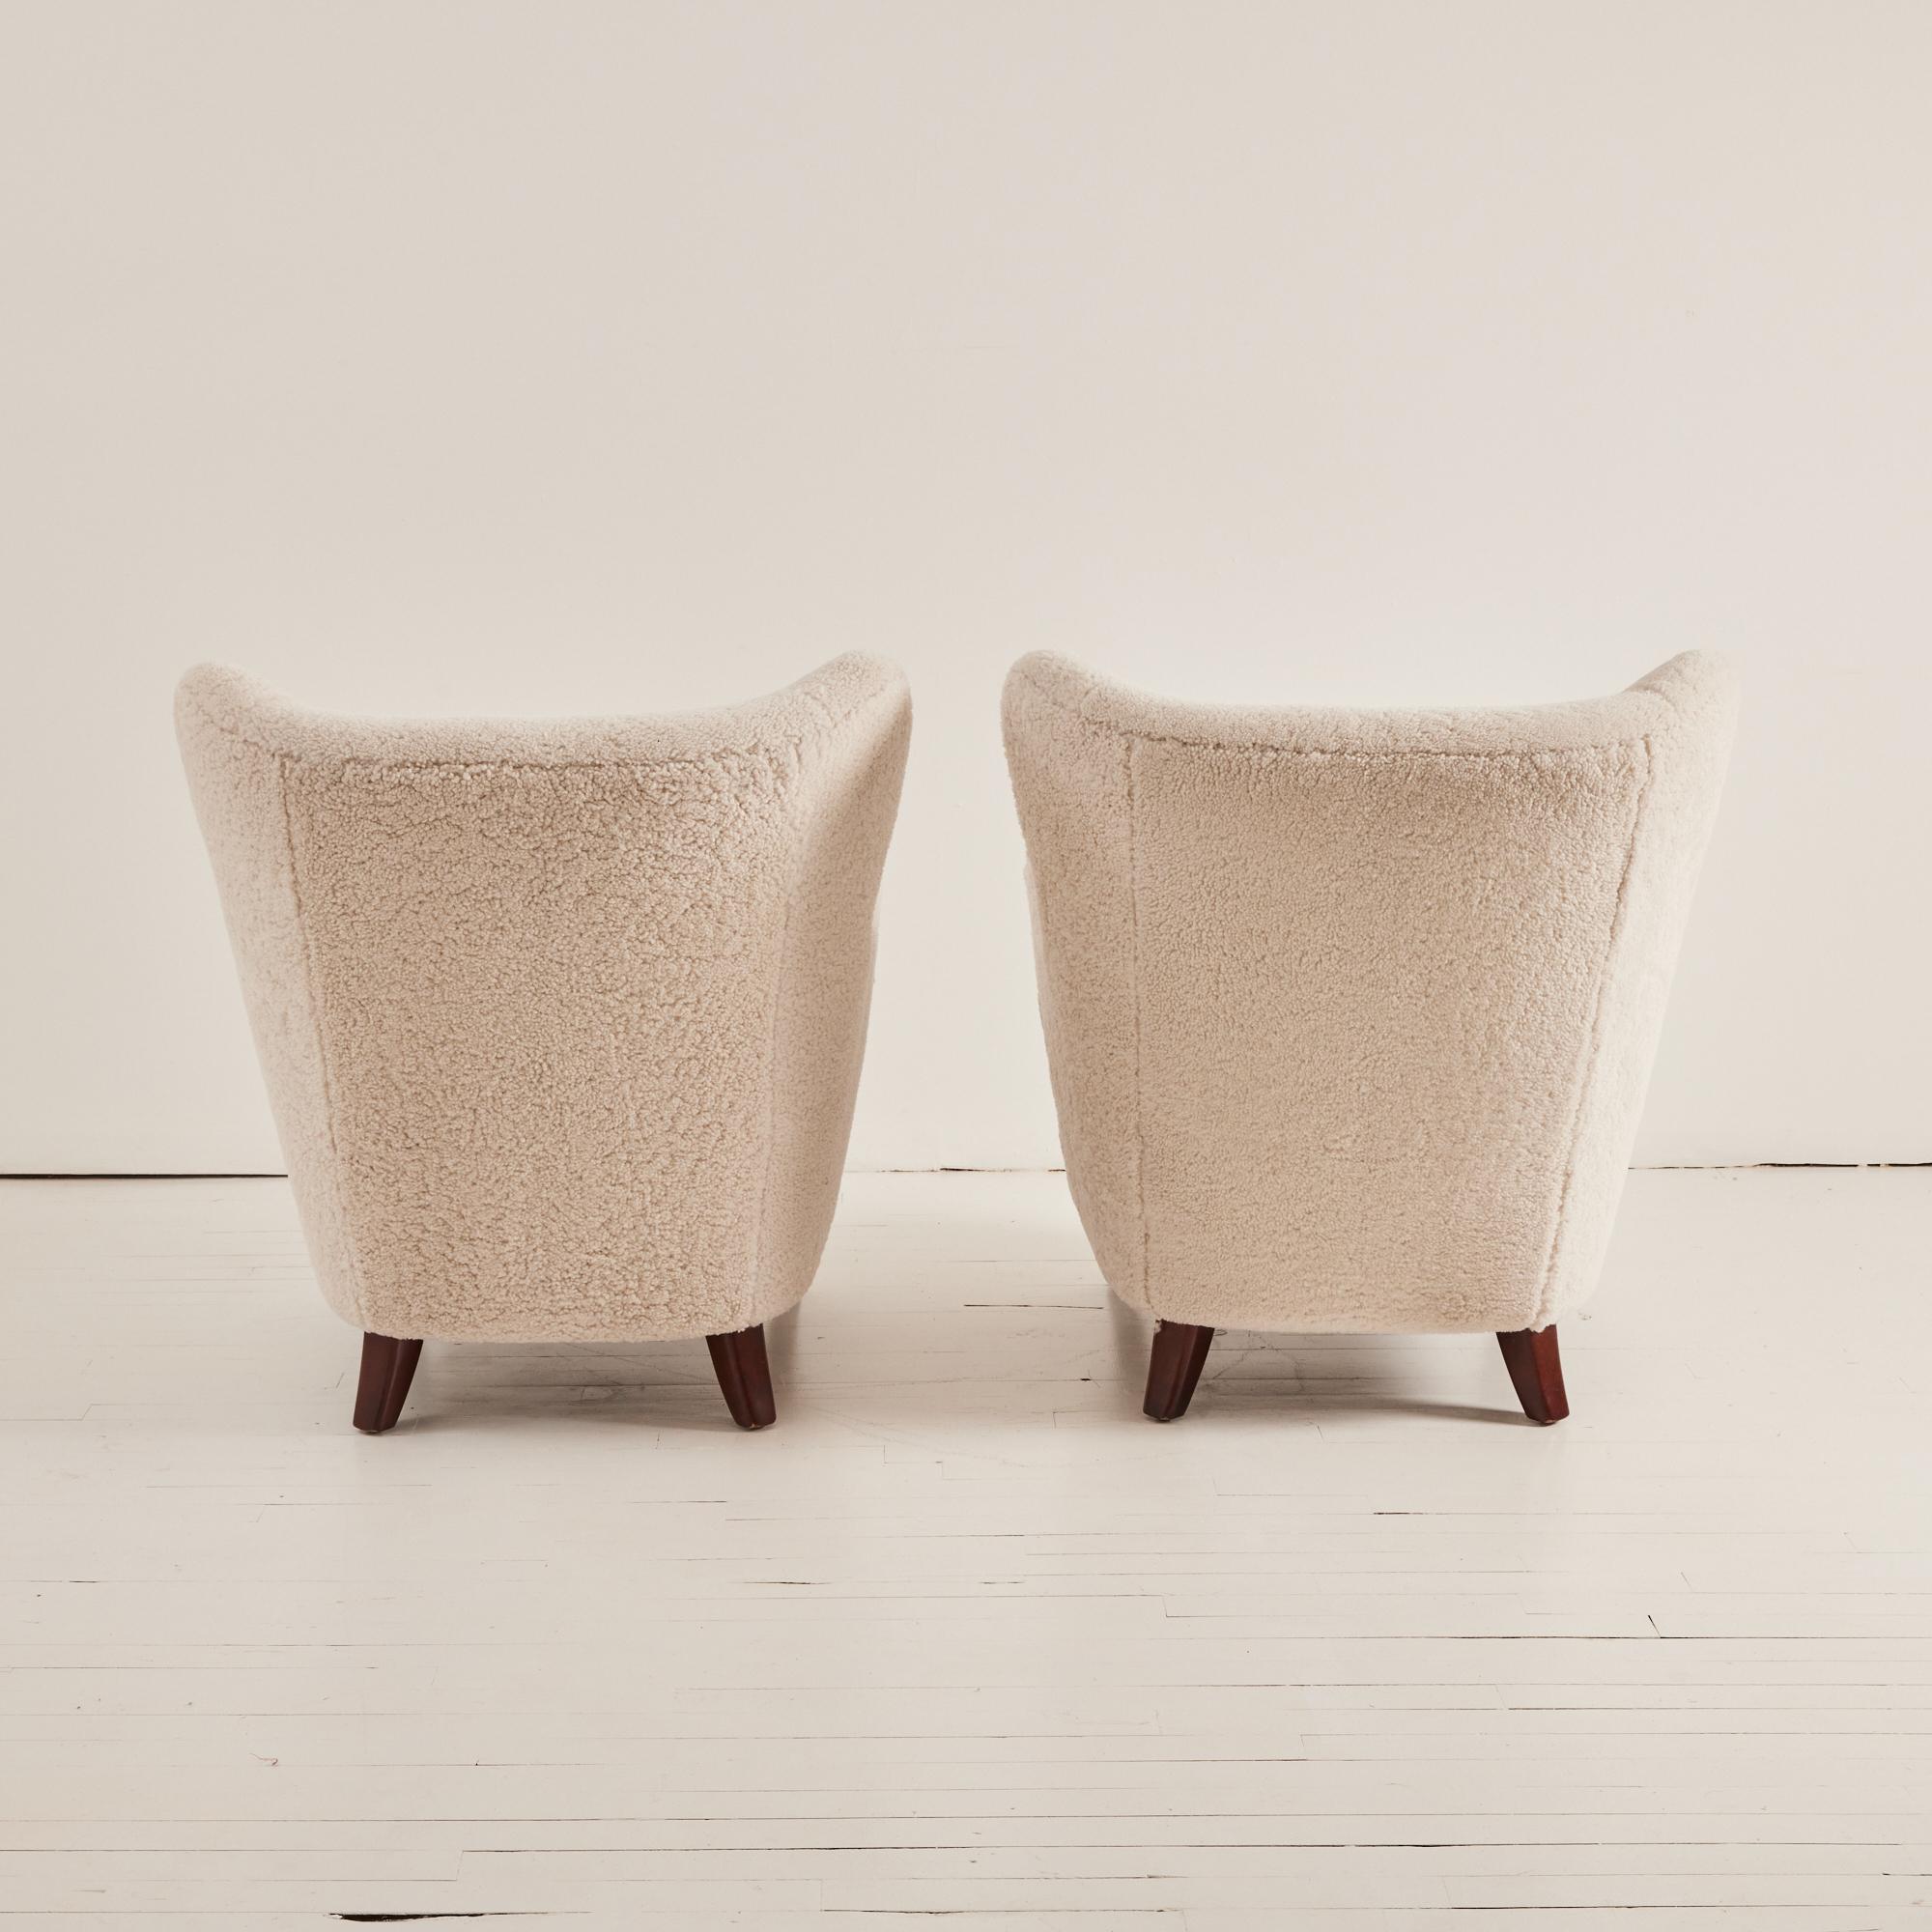 20th Century Swedish Sheepskin Lounge Chairs, 1950s - Set of 2